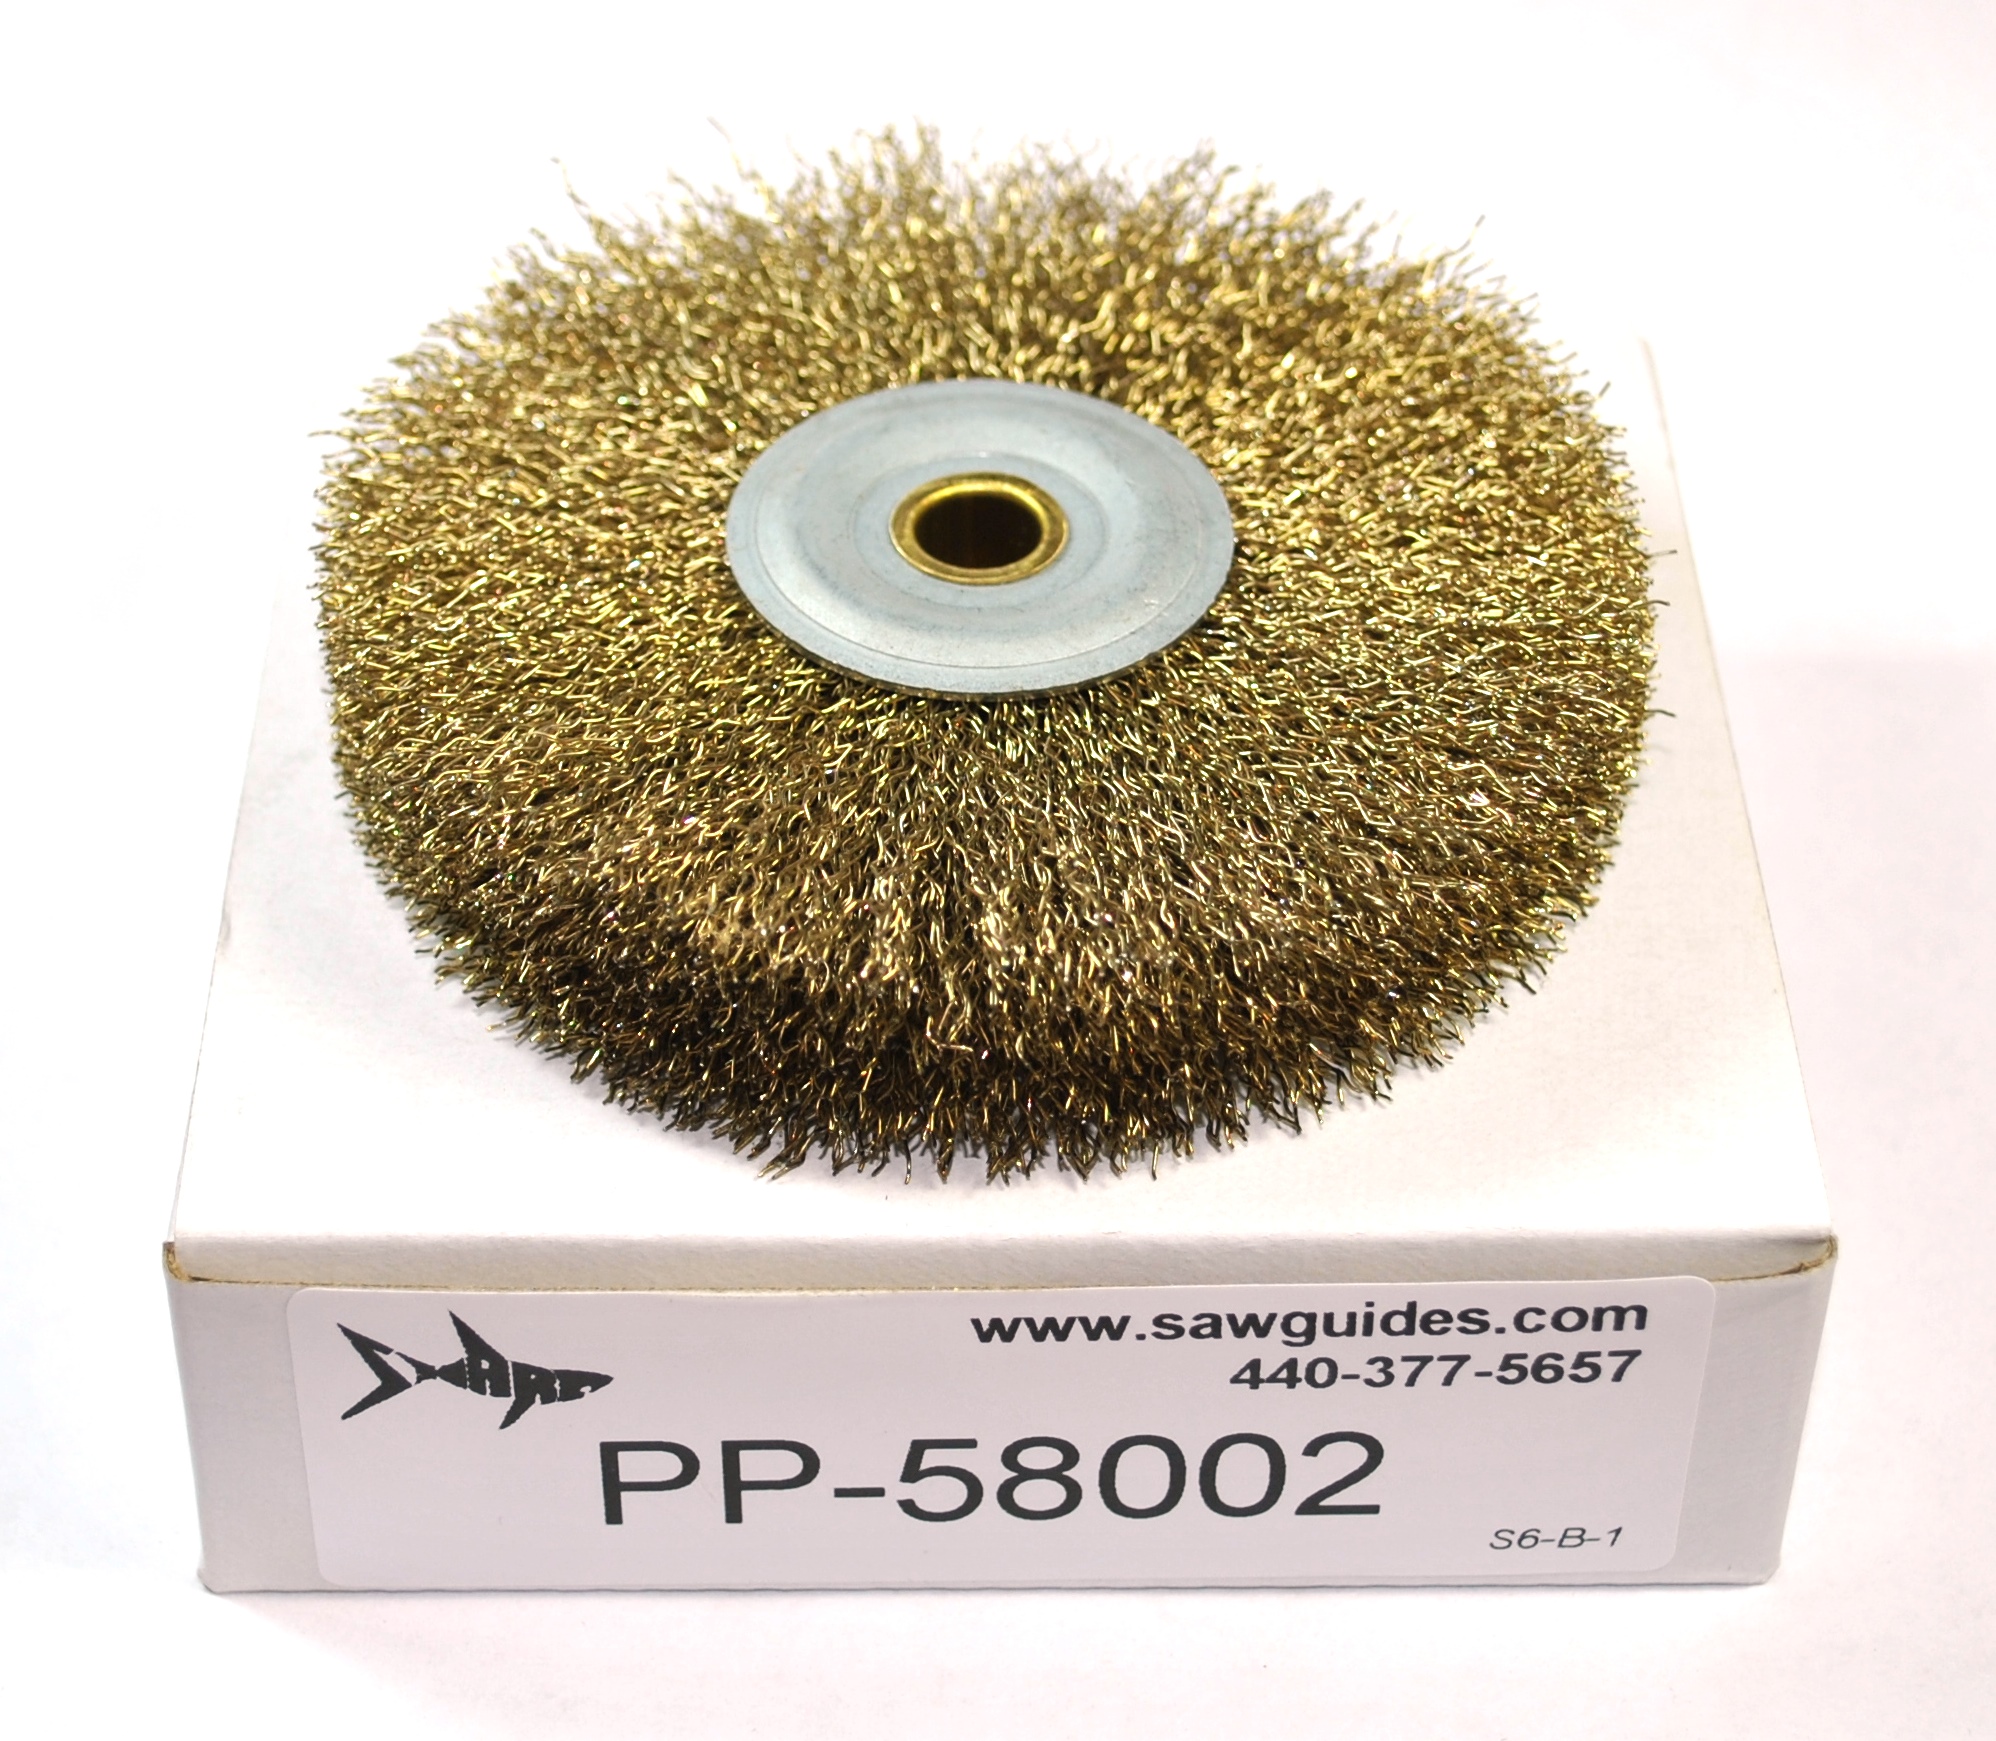 PP-58002 Blade Brush for Cosen & Clausing Saws